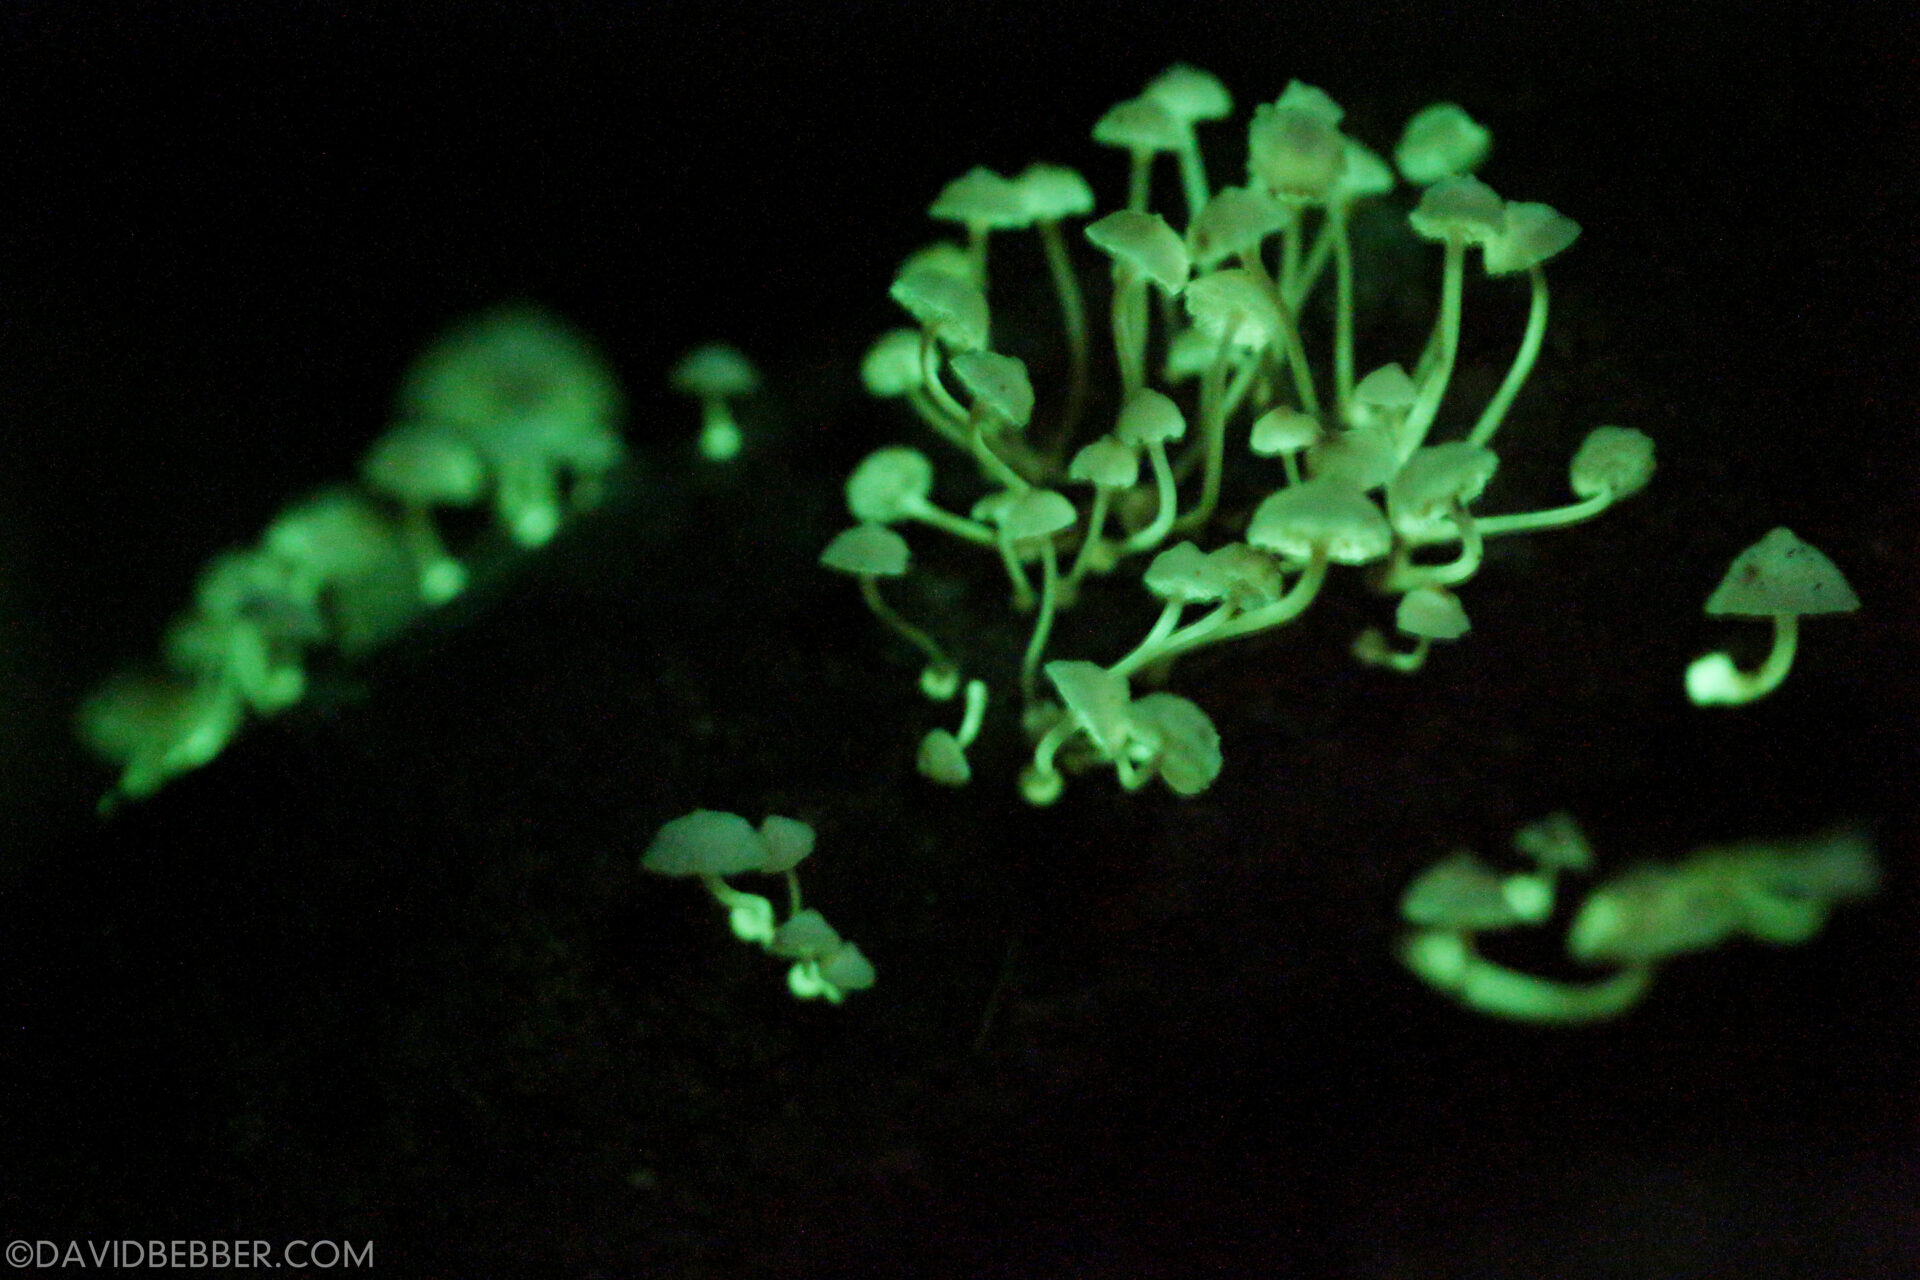 Some thin, small fungi glow in the dark.